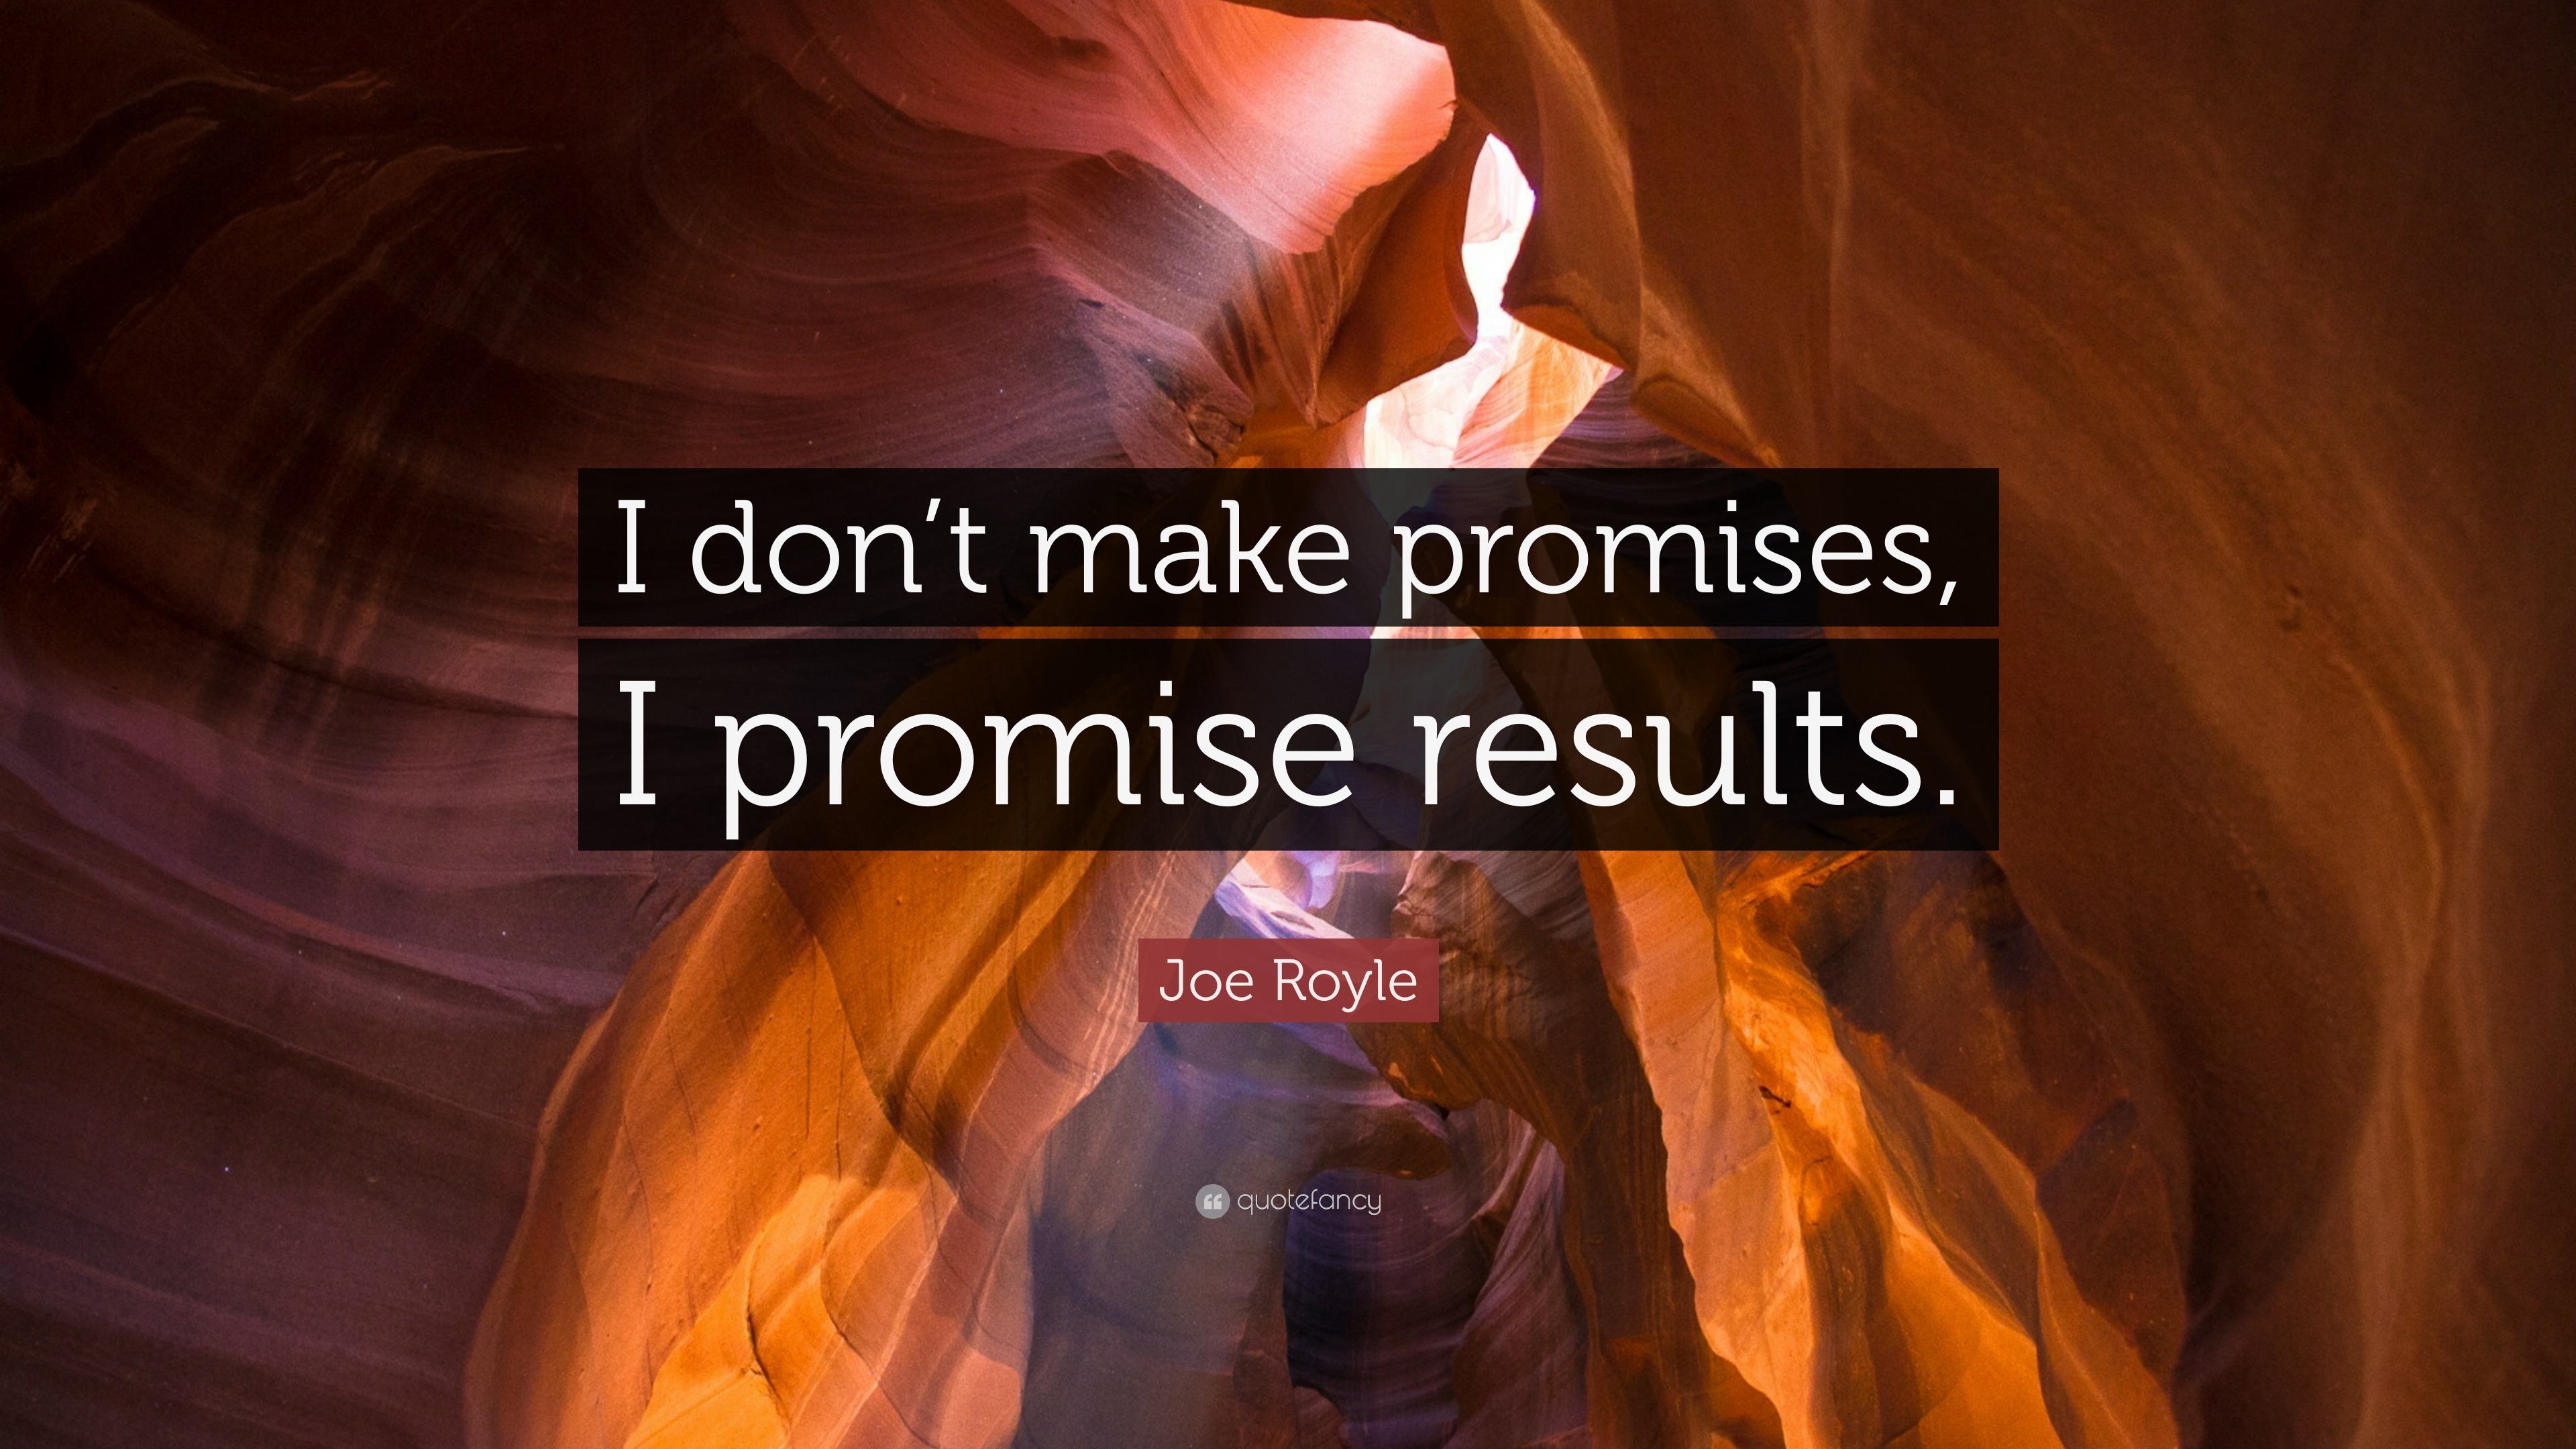 Joe Royle Quote: “I don't make promises, I promise results.”